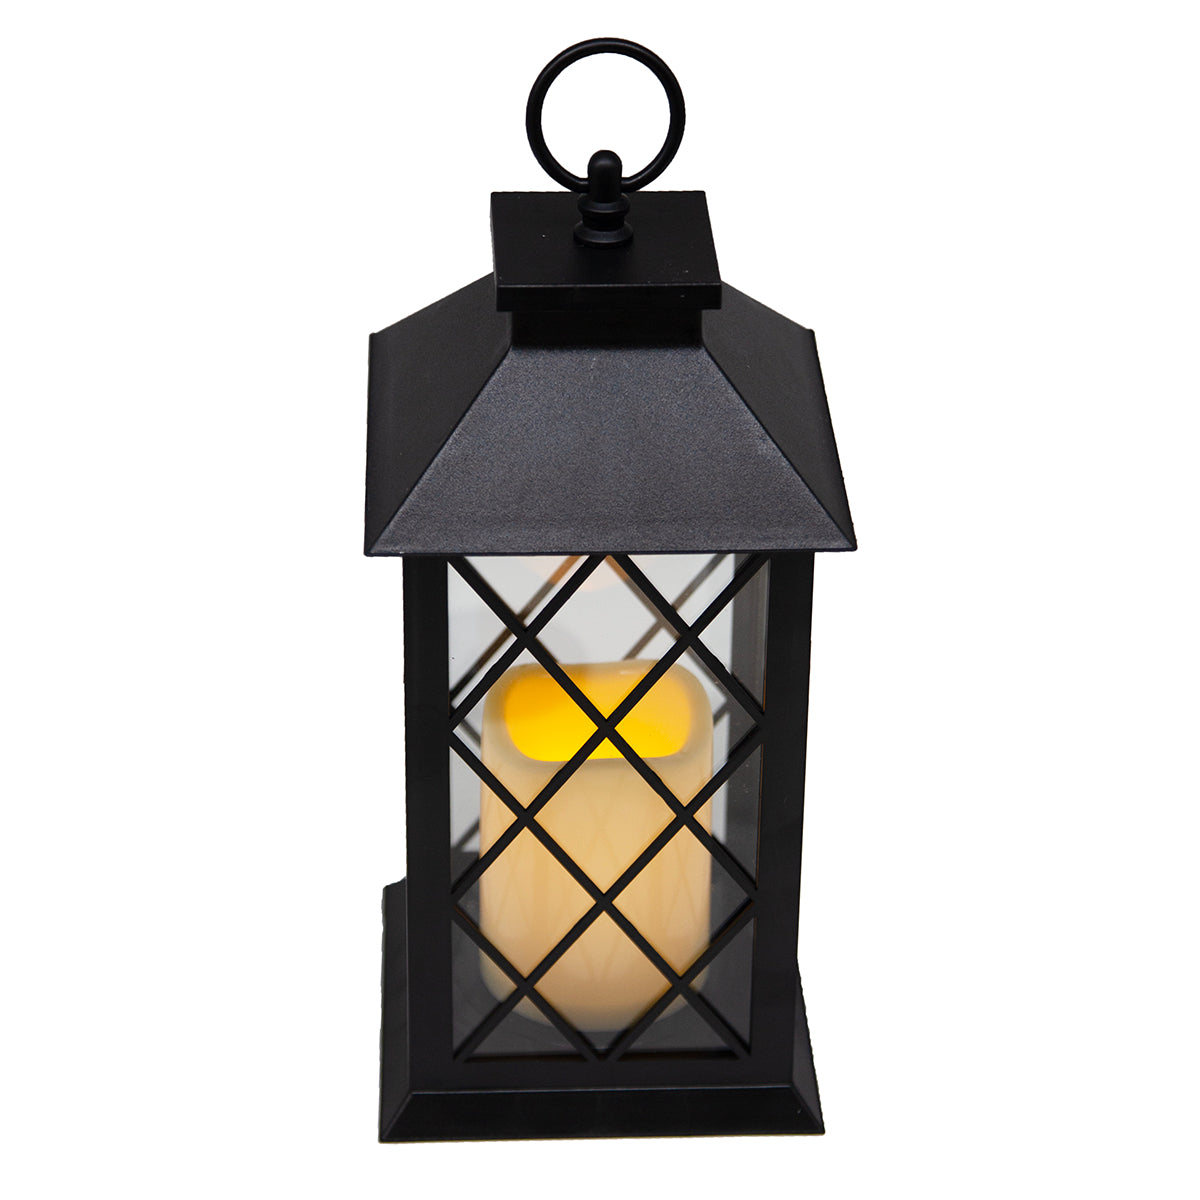 Indoor/Outdoor Black Lattice LED Lantern w/ 4-Hour Battery-Saving Timer 5.5"L x 5.5"W x 13.5"H